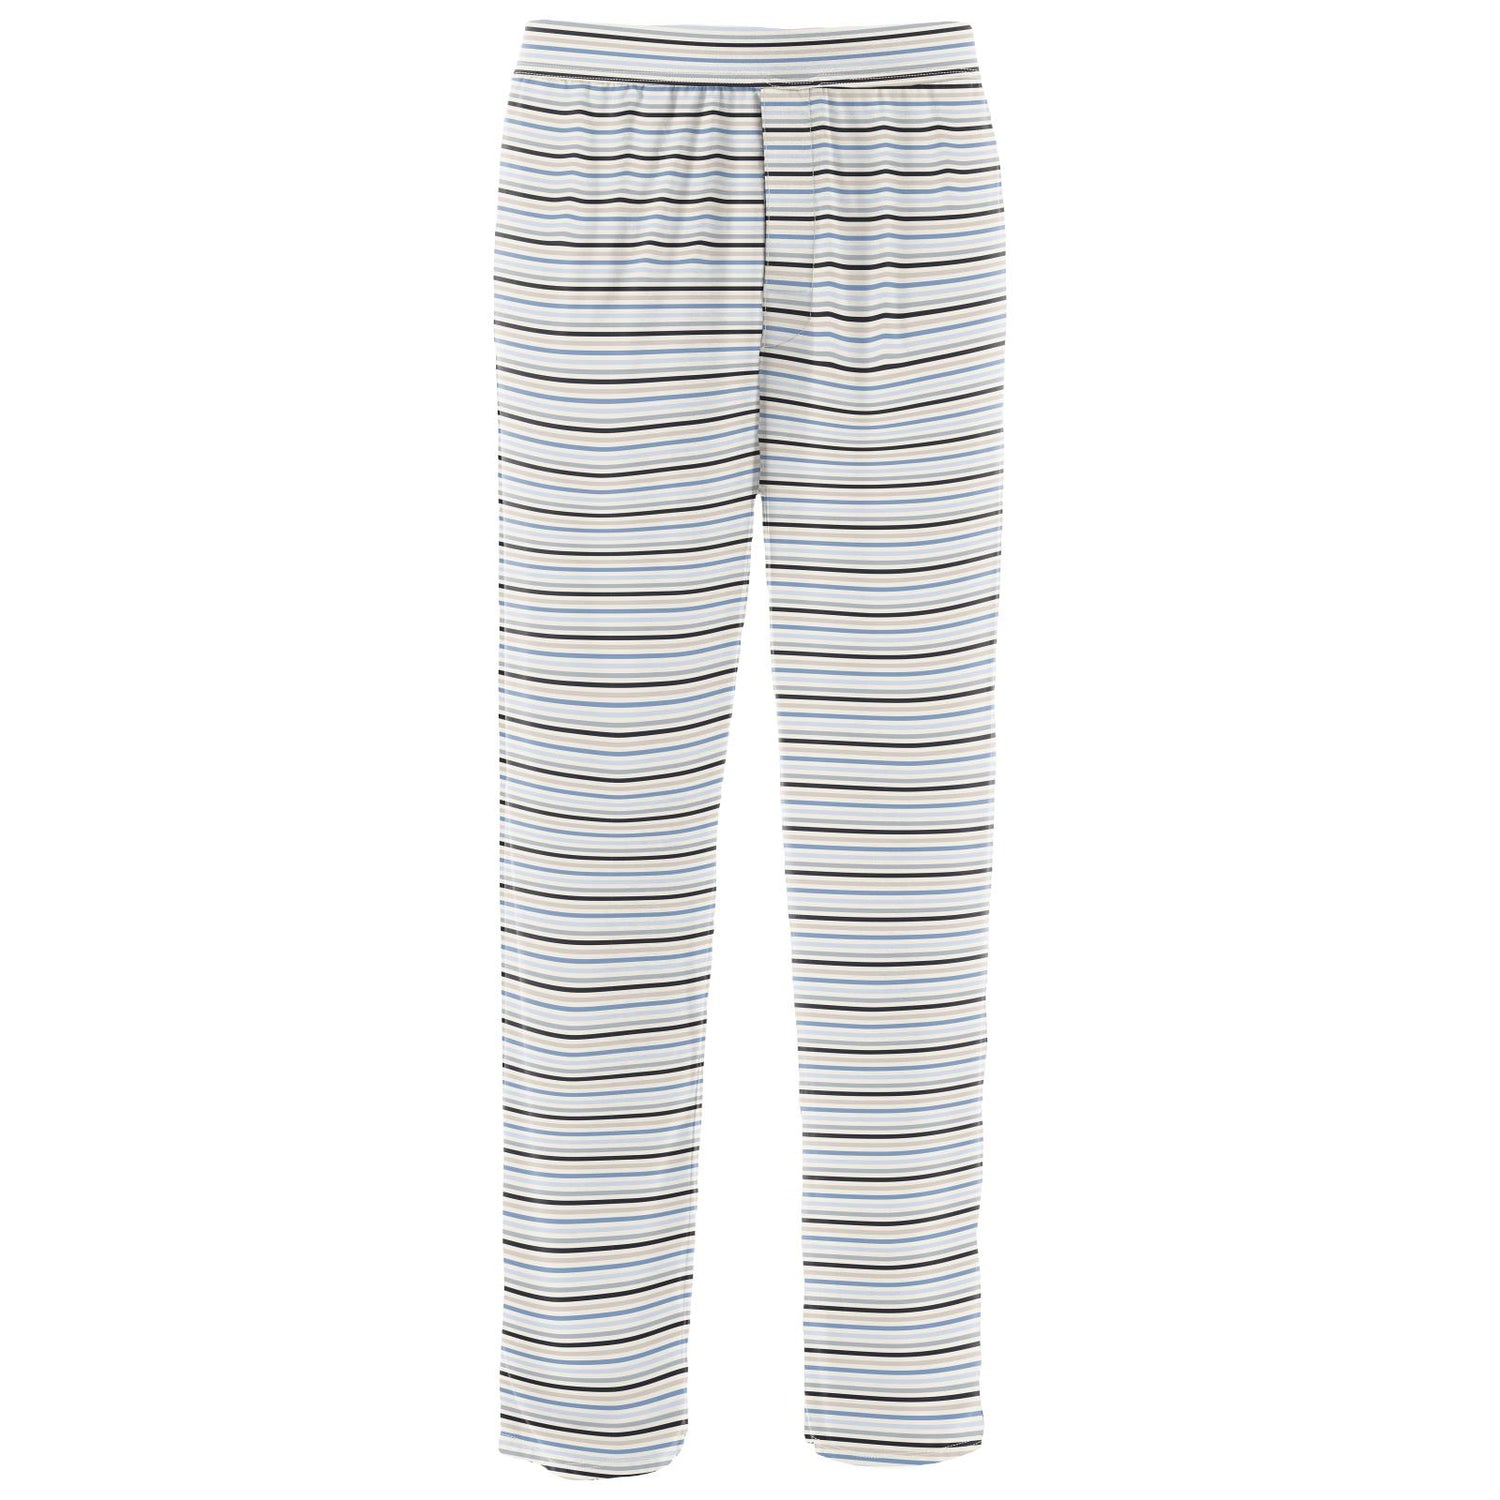 Men's Print Pajama Pants in Rhyme Stripe